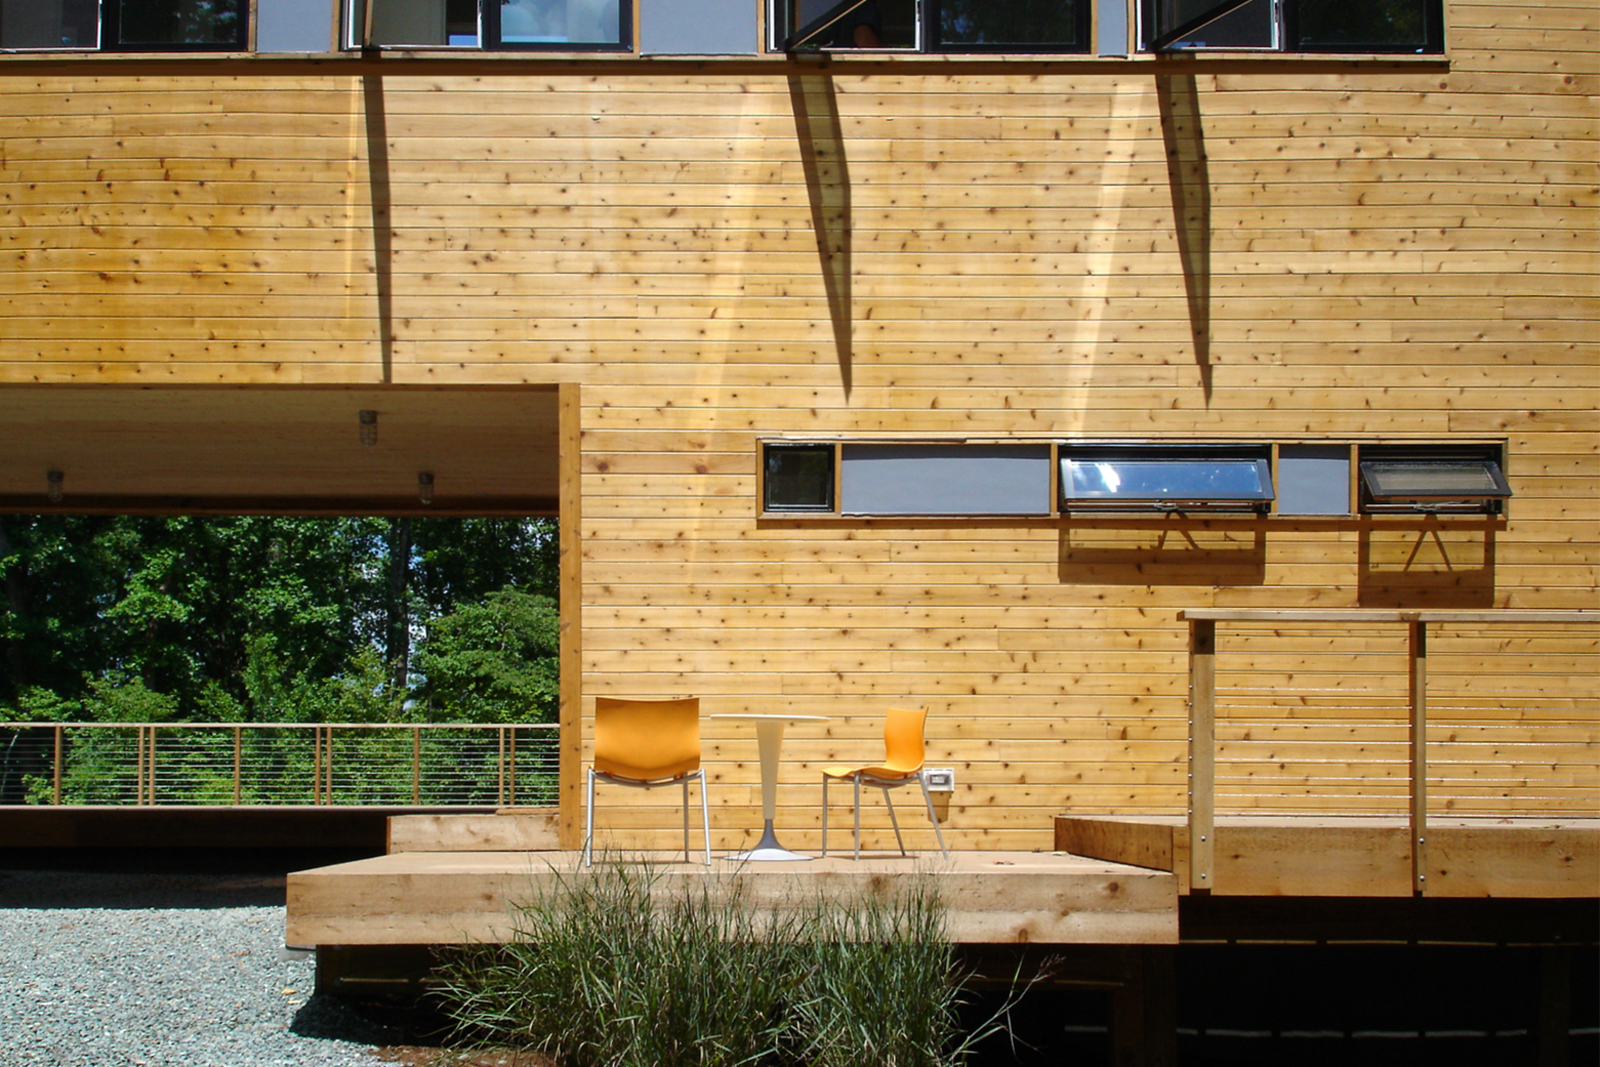 04-res4-resolution-4-architecture-modern-modular-house-prefab-dwell-home-exterior.jpg